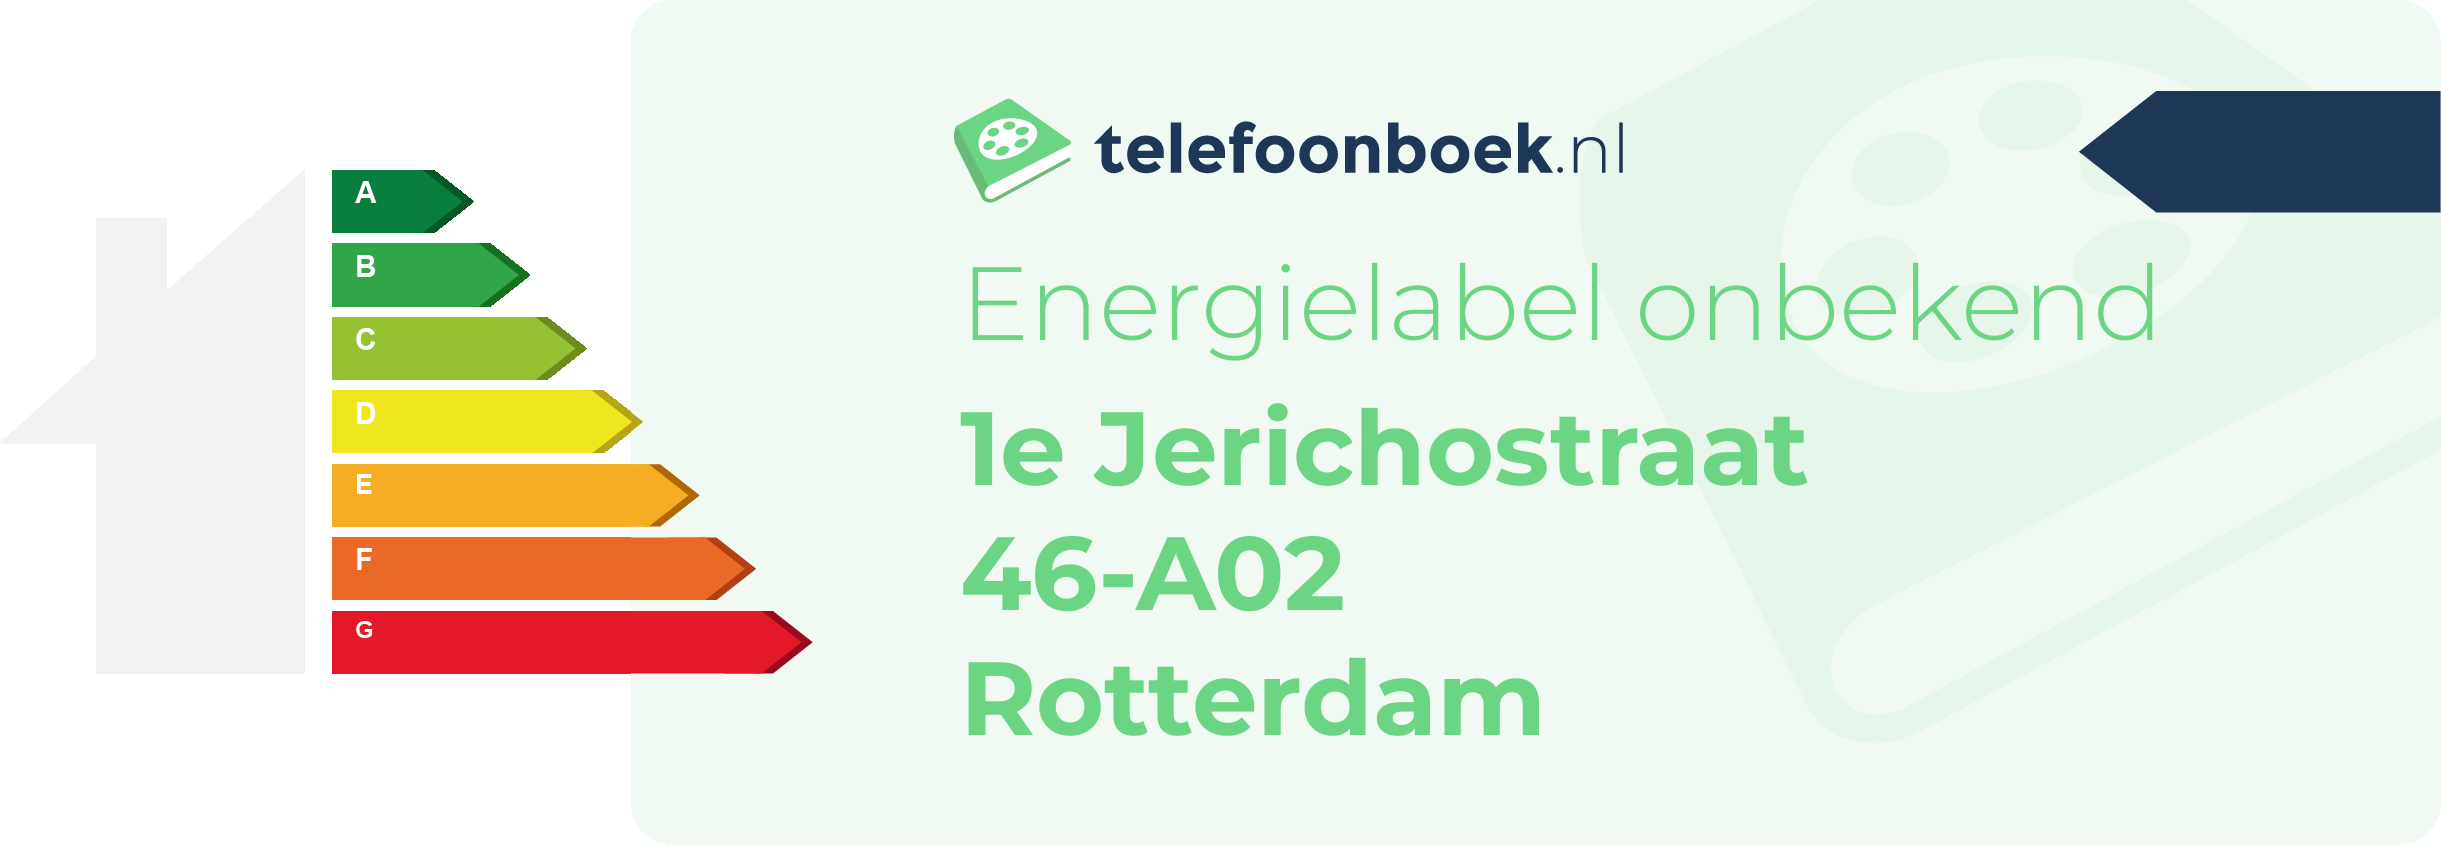 Energielabel 1e Jerichostraat 46-A02 Rotterdam